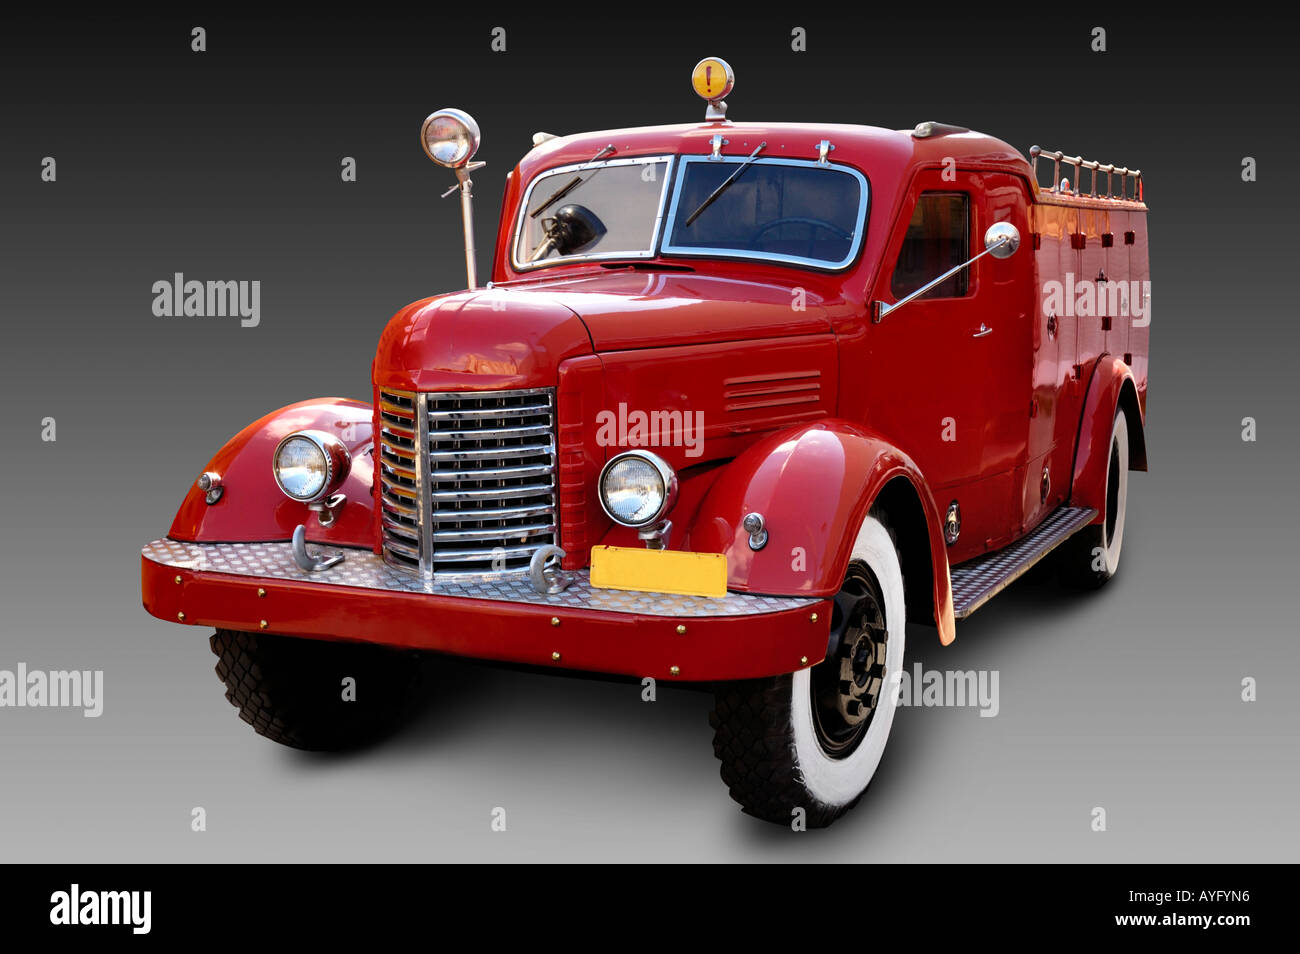 Retro Fire Engine Stock Photo